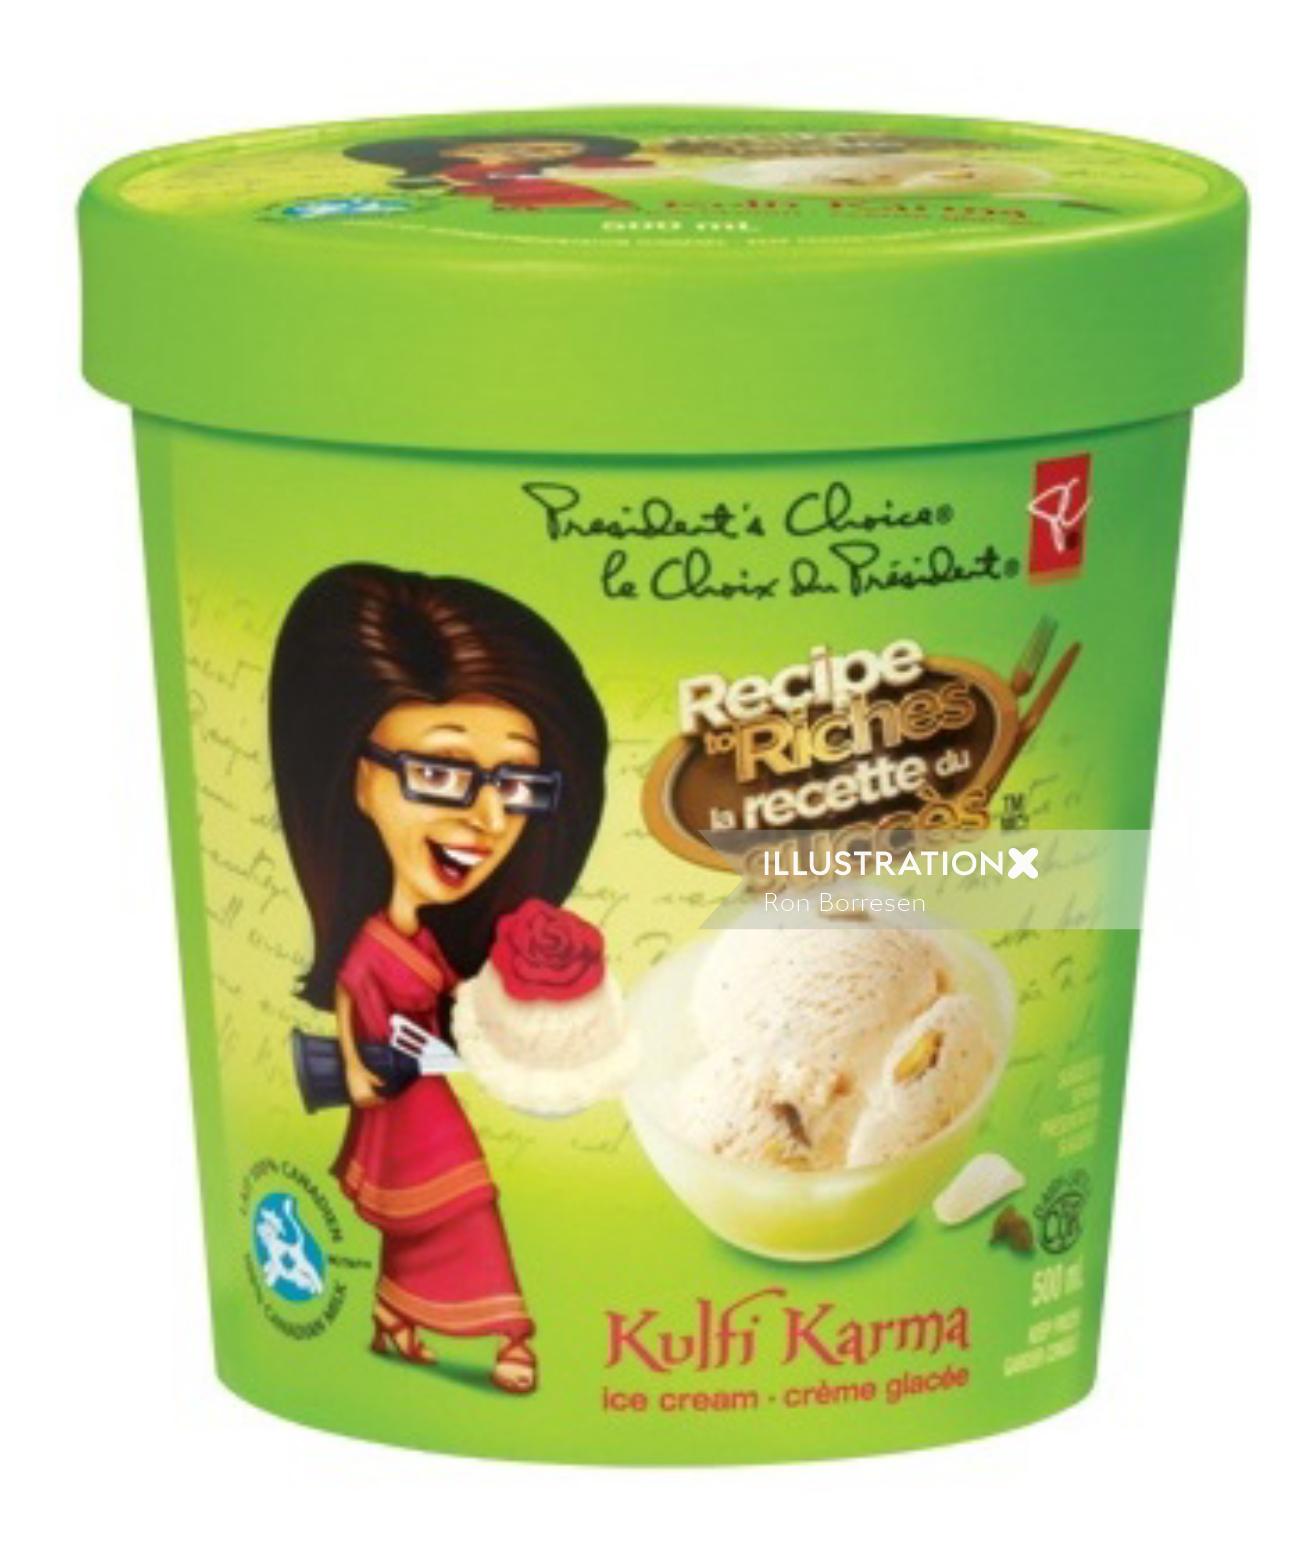 Recipe to Riches - Kulfi karma ice cream packaging